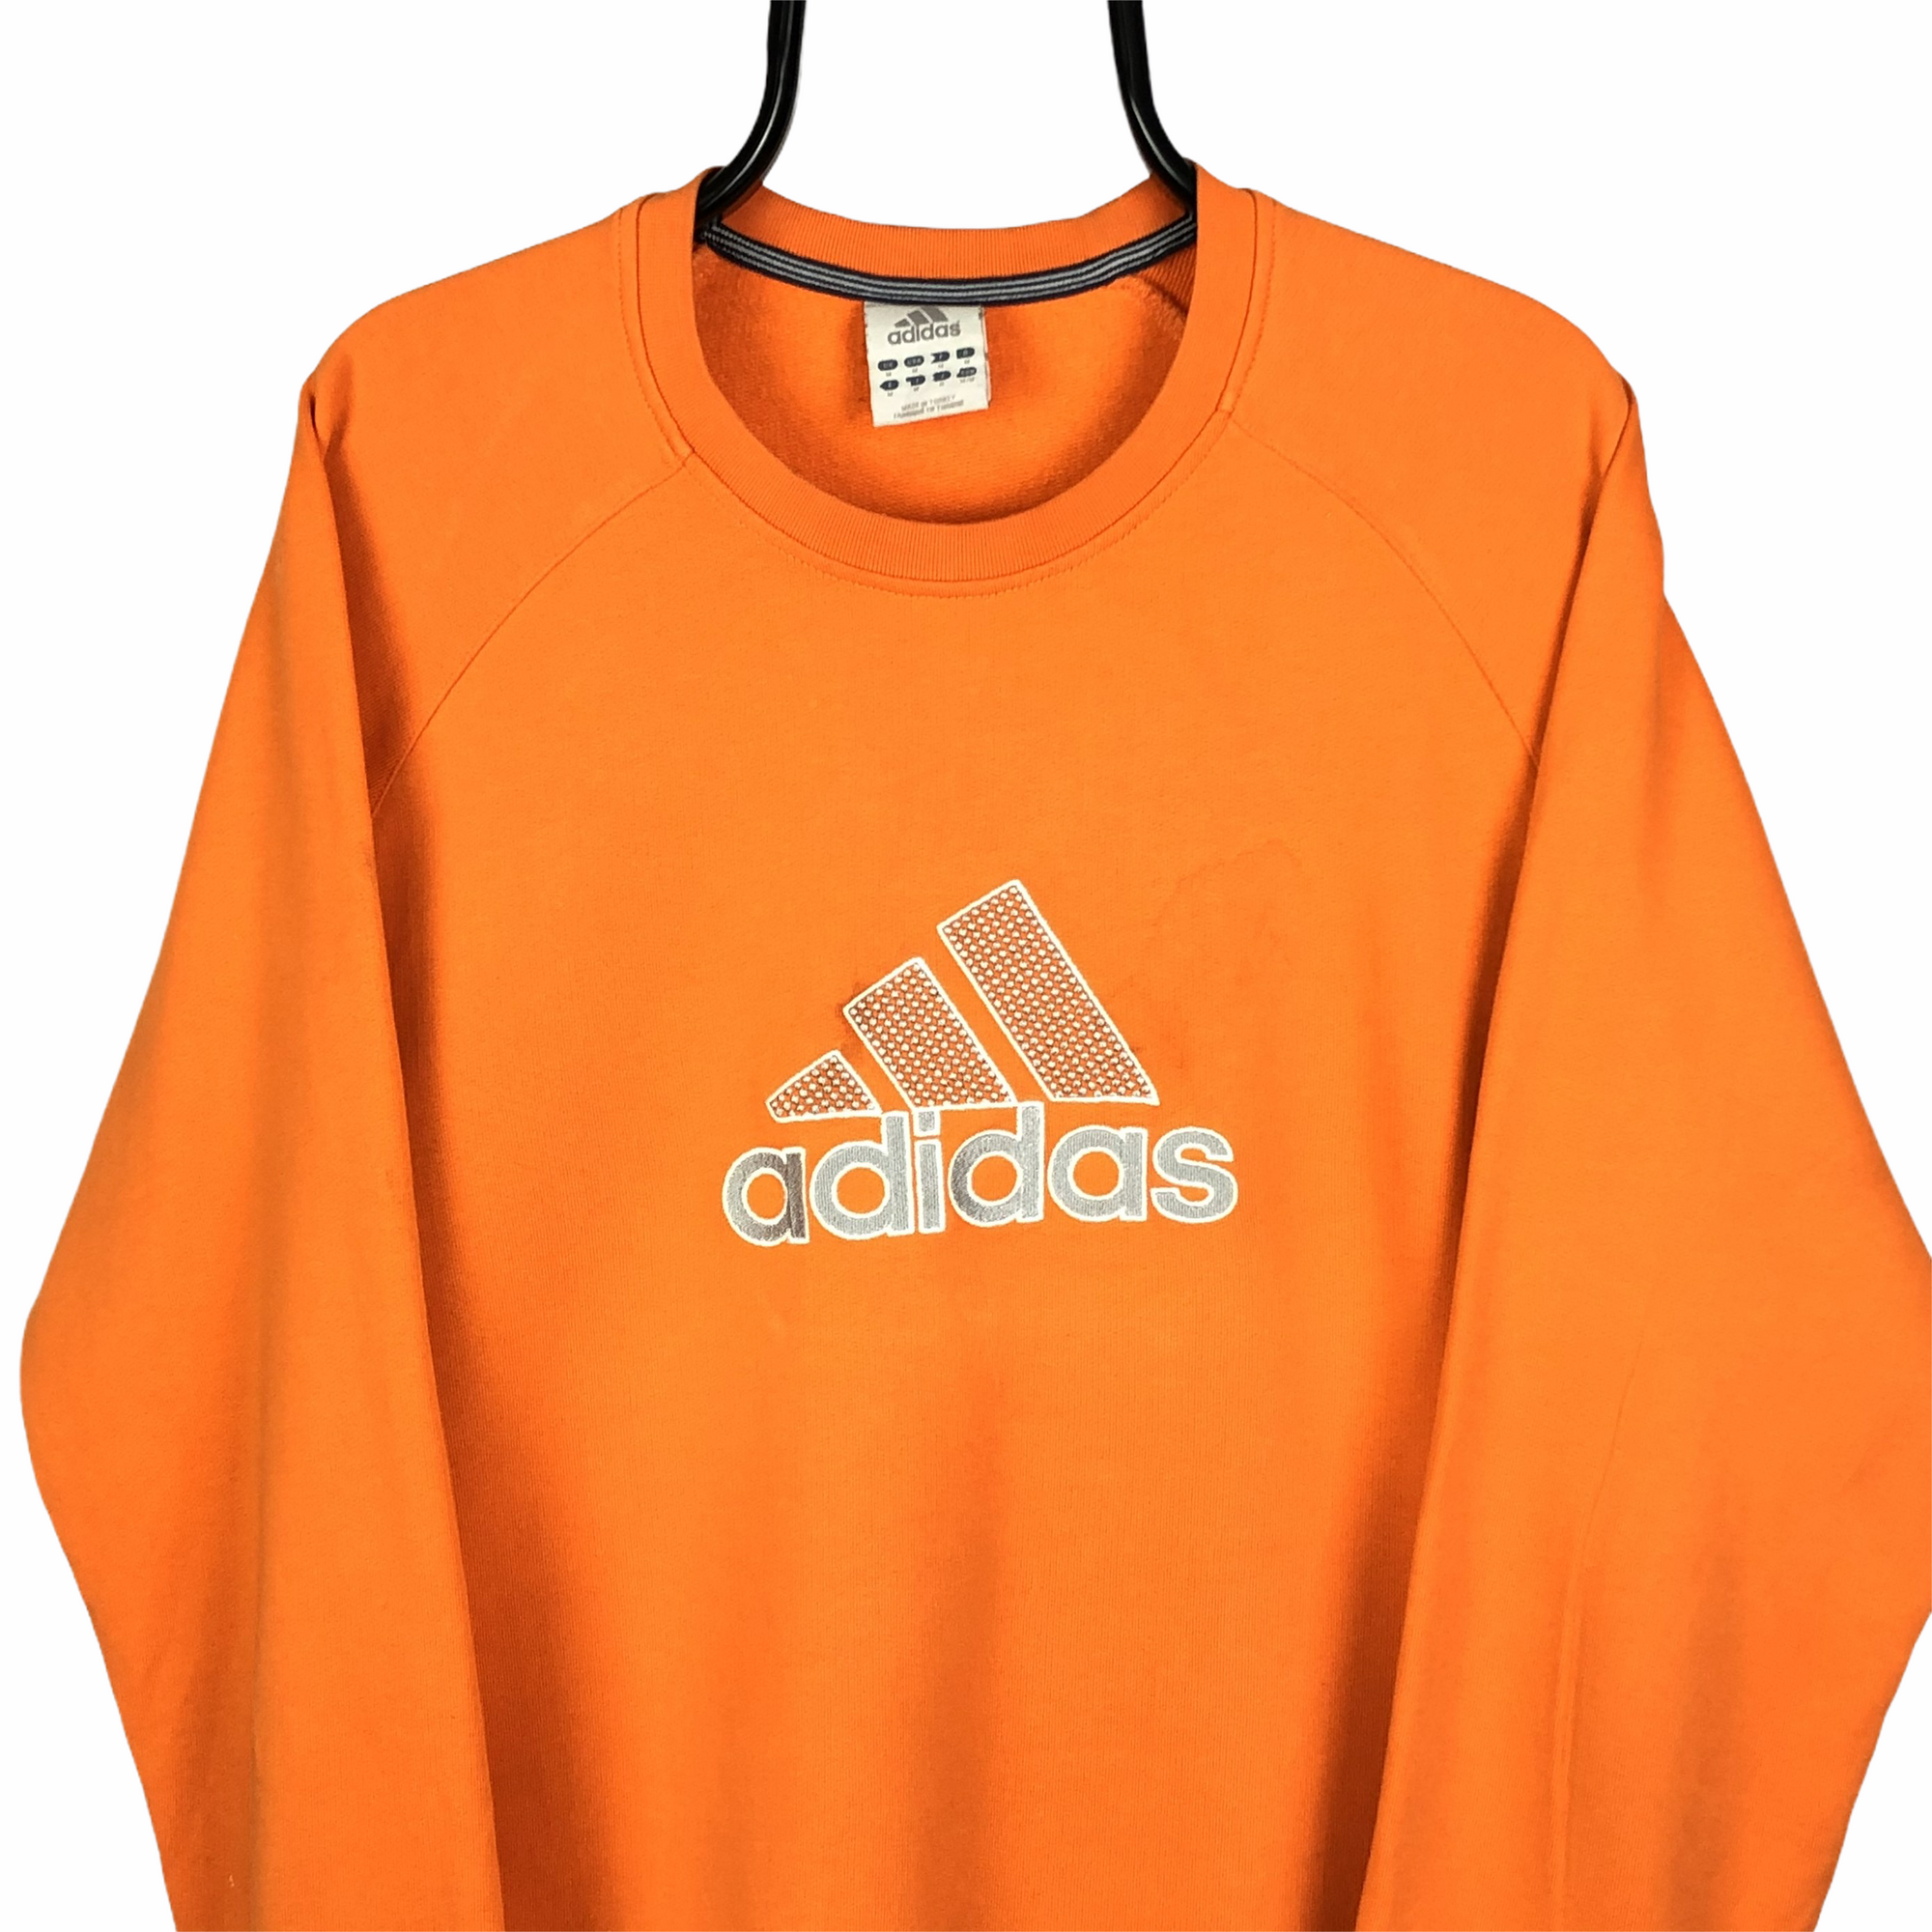 Vintage Adidas Spellout Sweatshirt in Orange - Men's Large/Women's XL